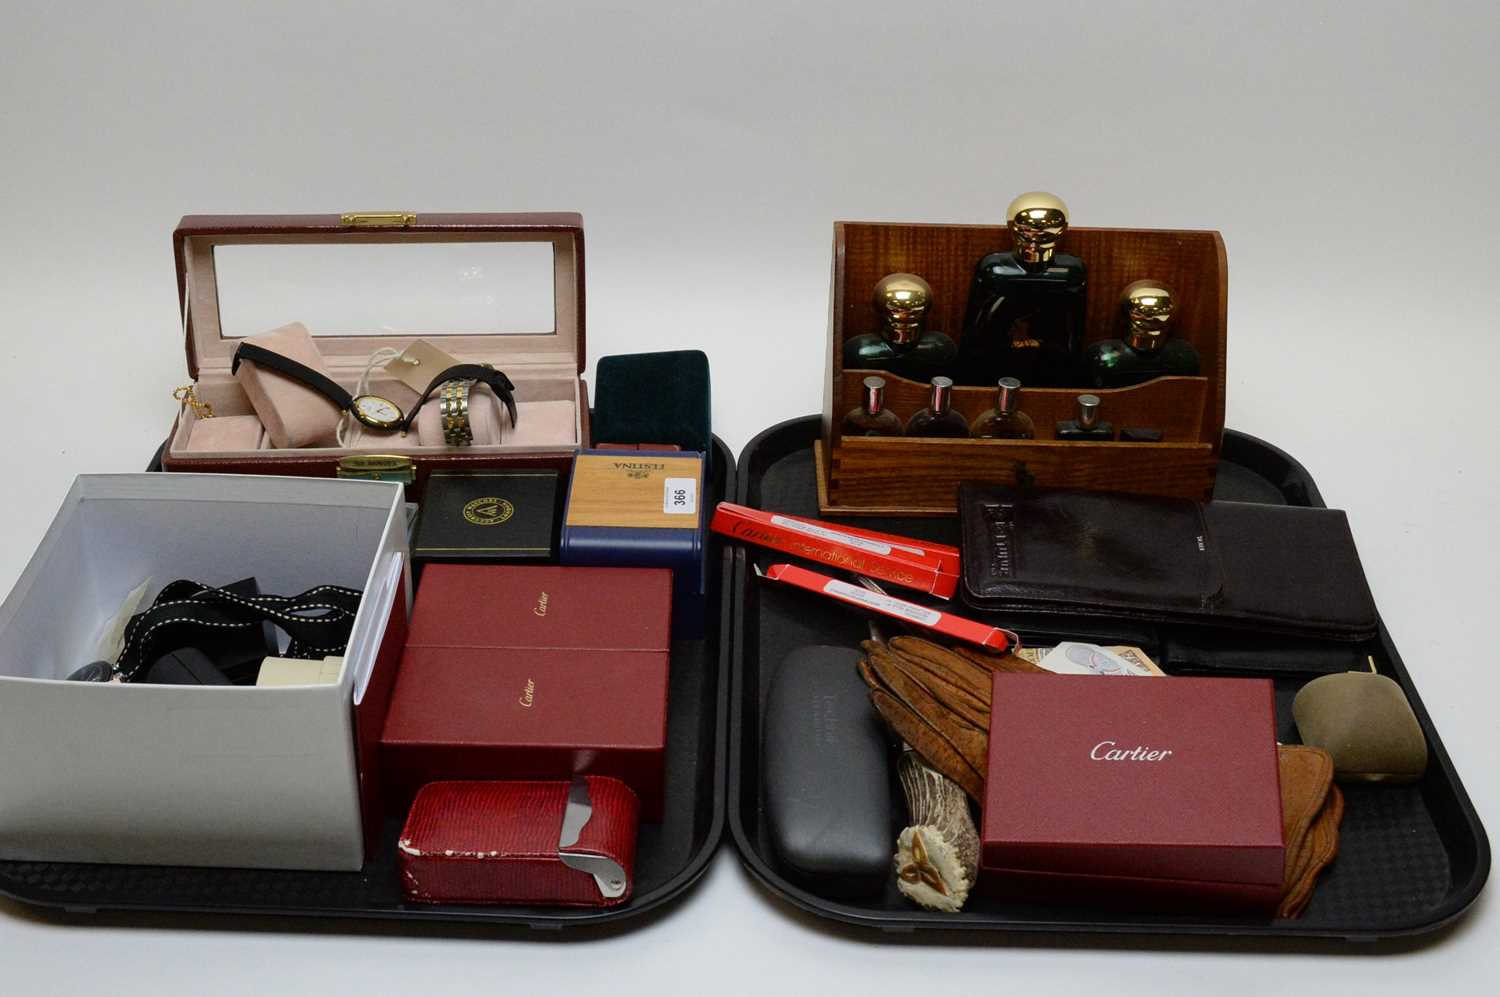  Cartier Cartier Watch Cleaning Kit